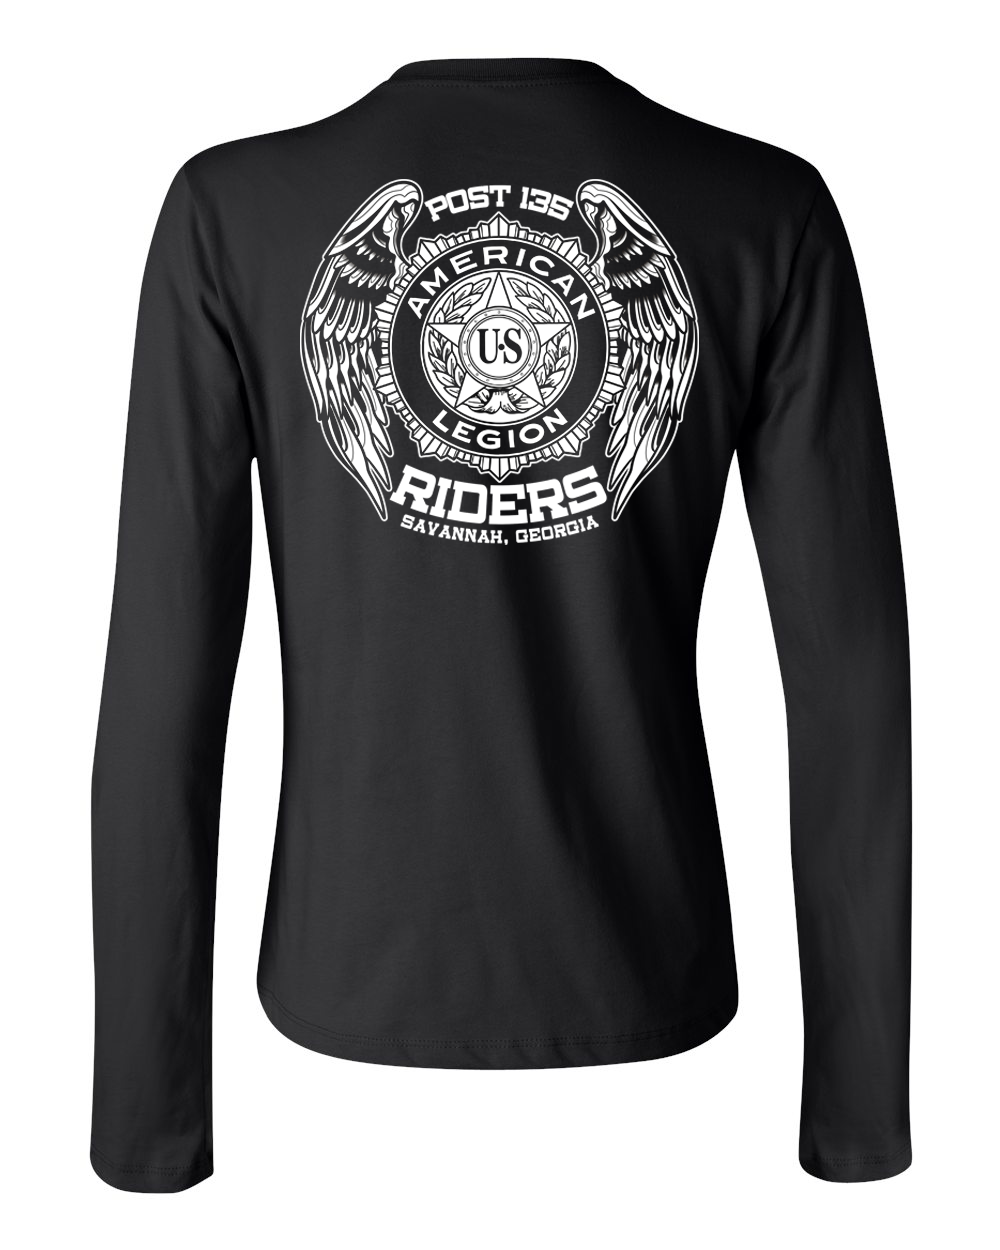 American Legion Riders Women’s Long Sleeve Shirt